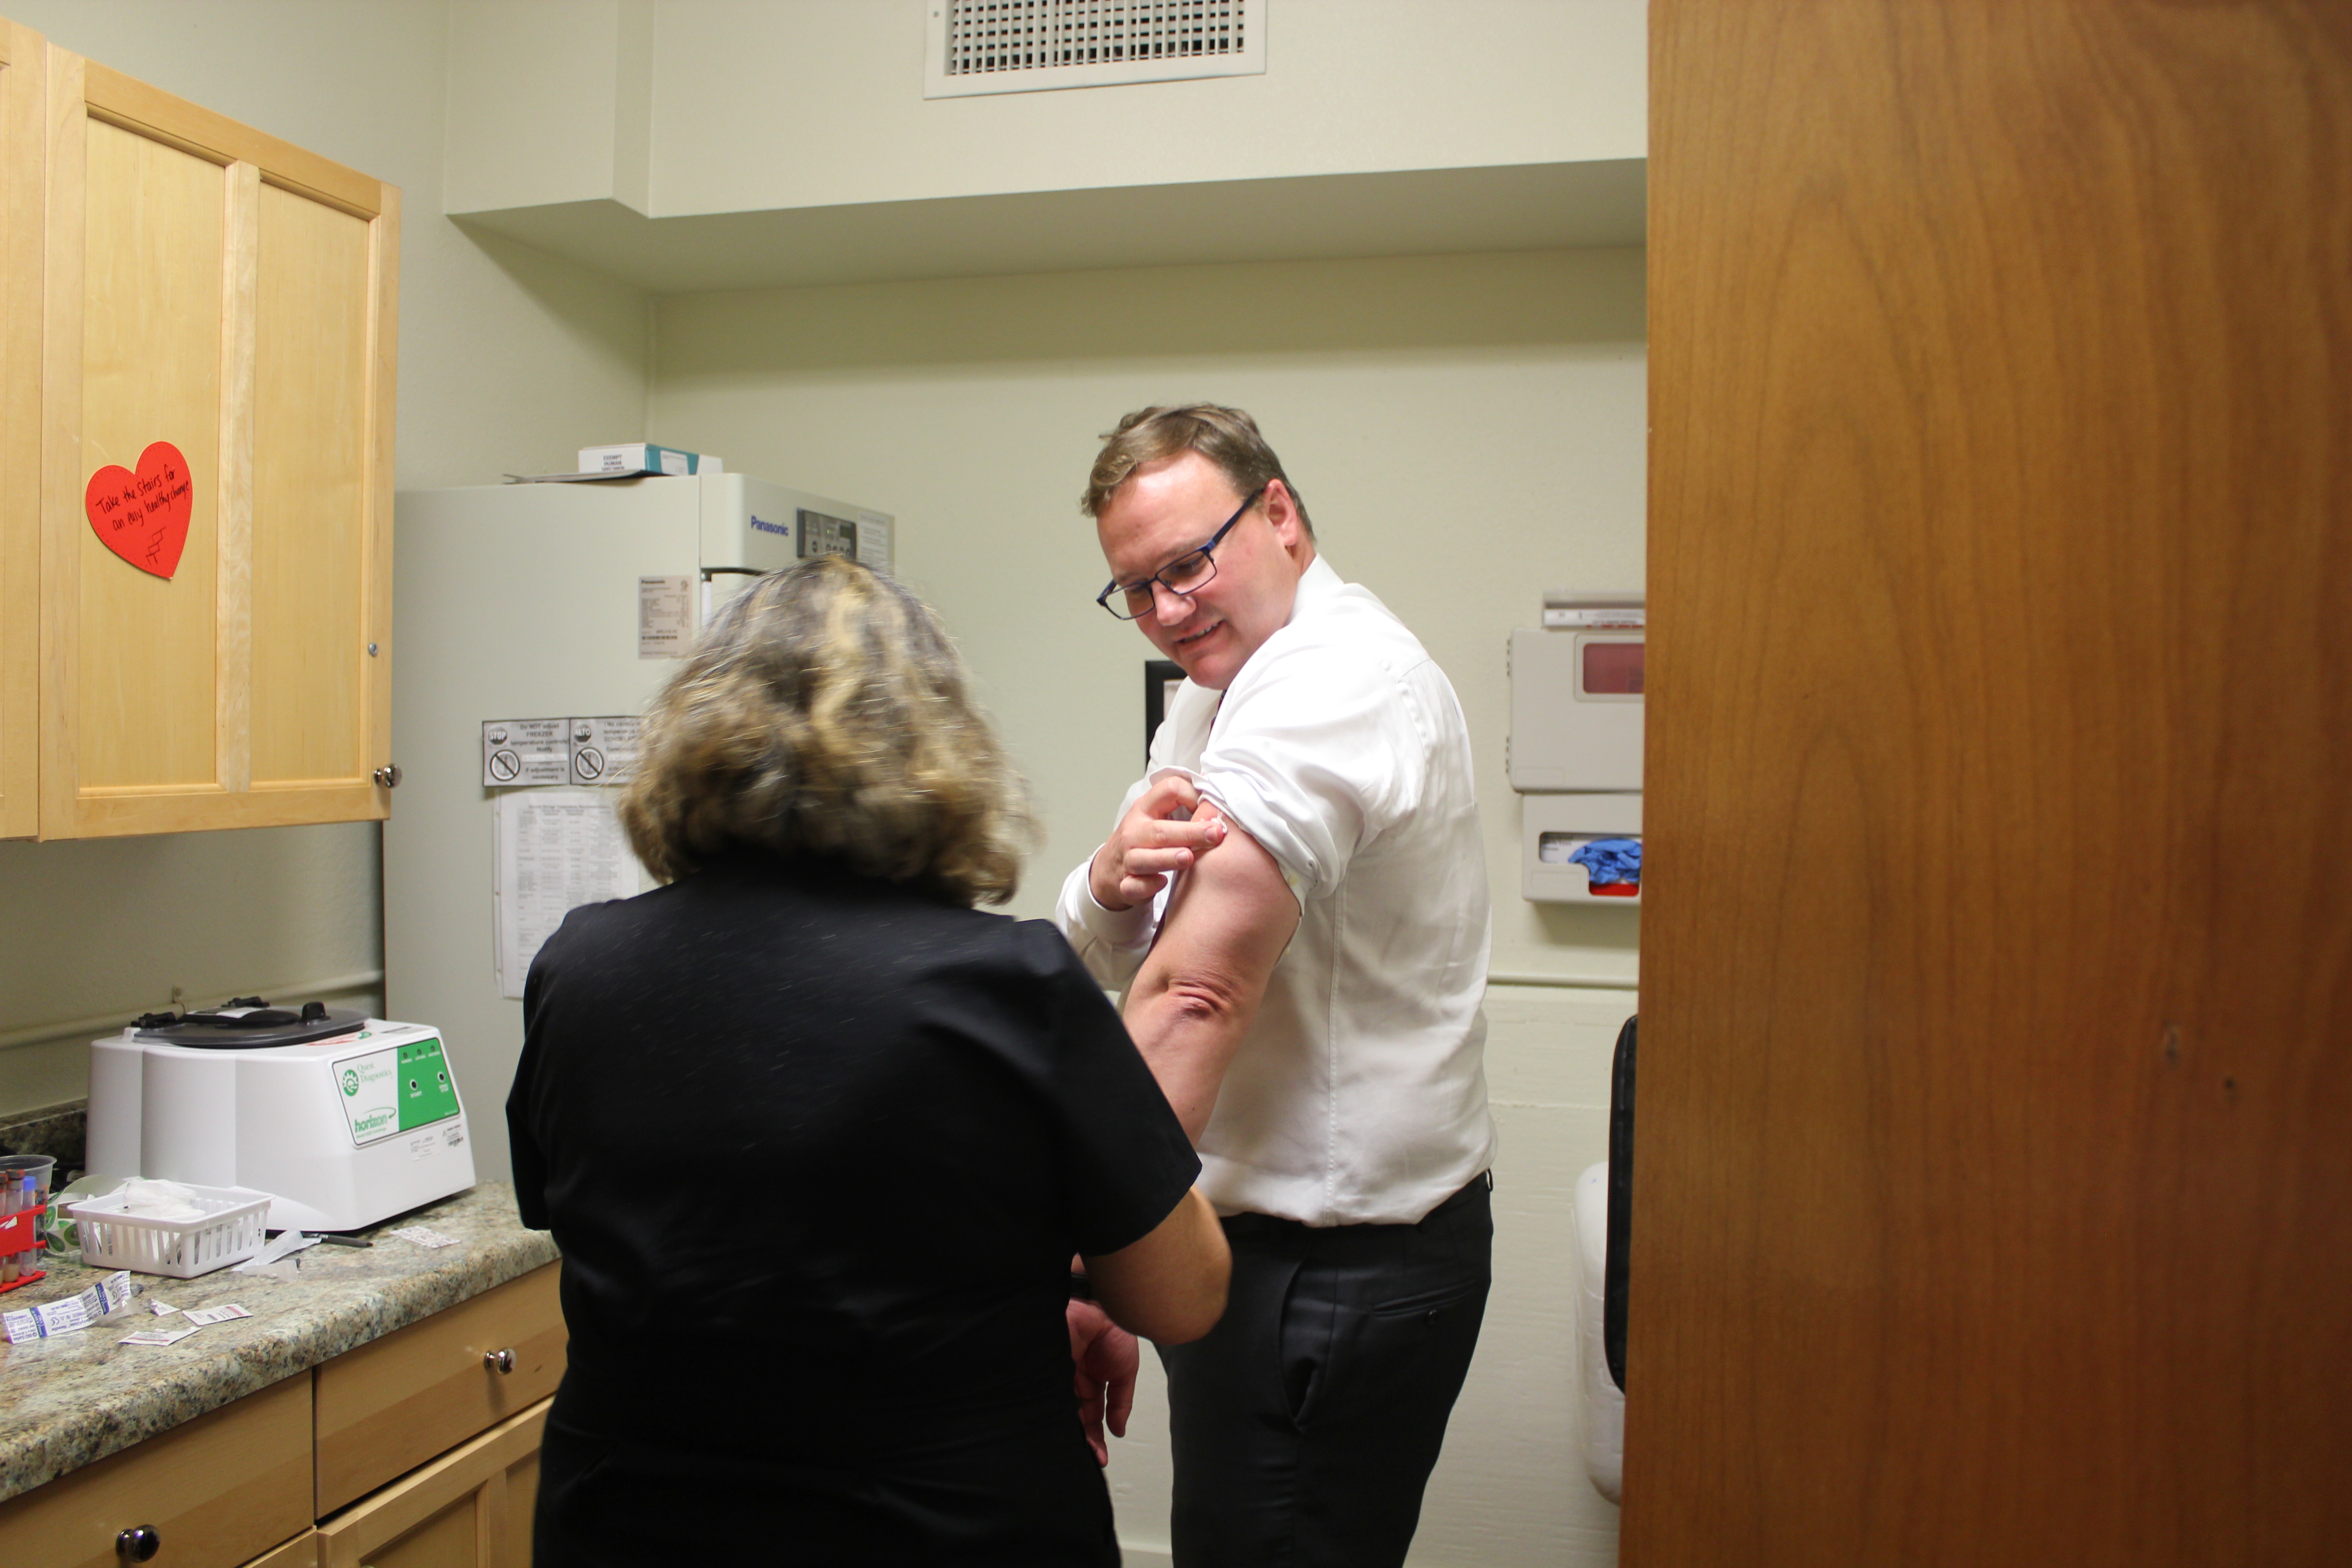 Dr. Evans gets his flu shot at UIW